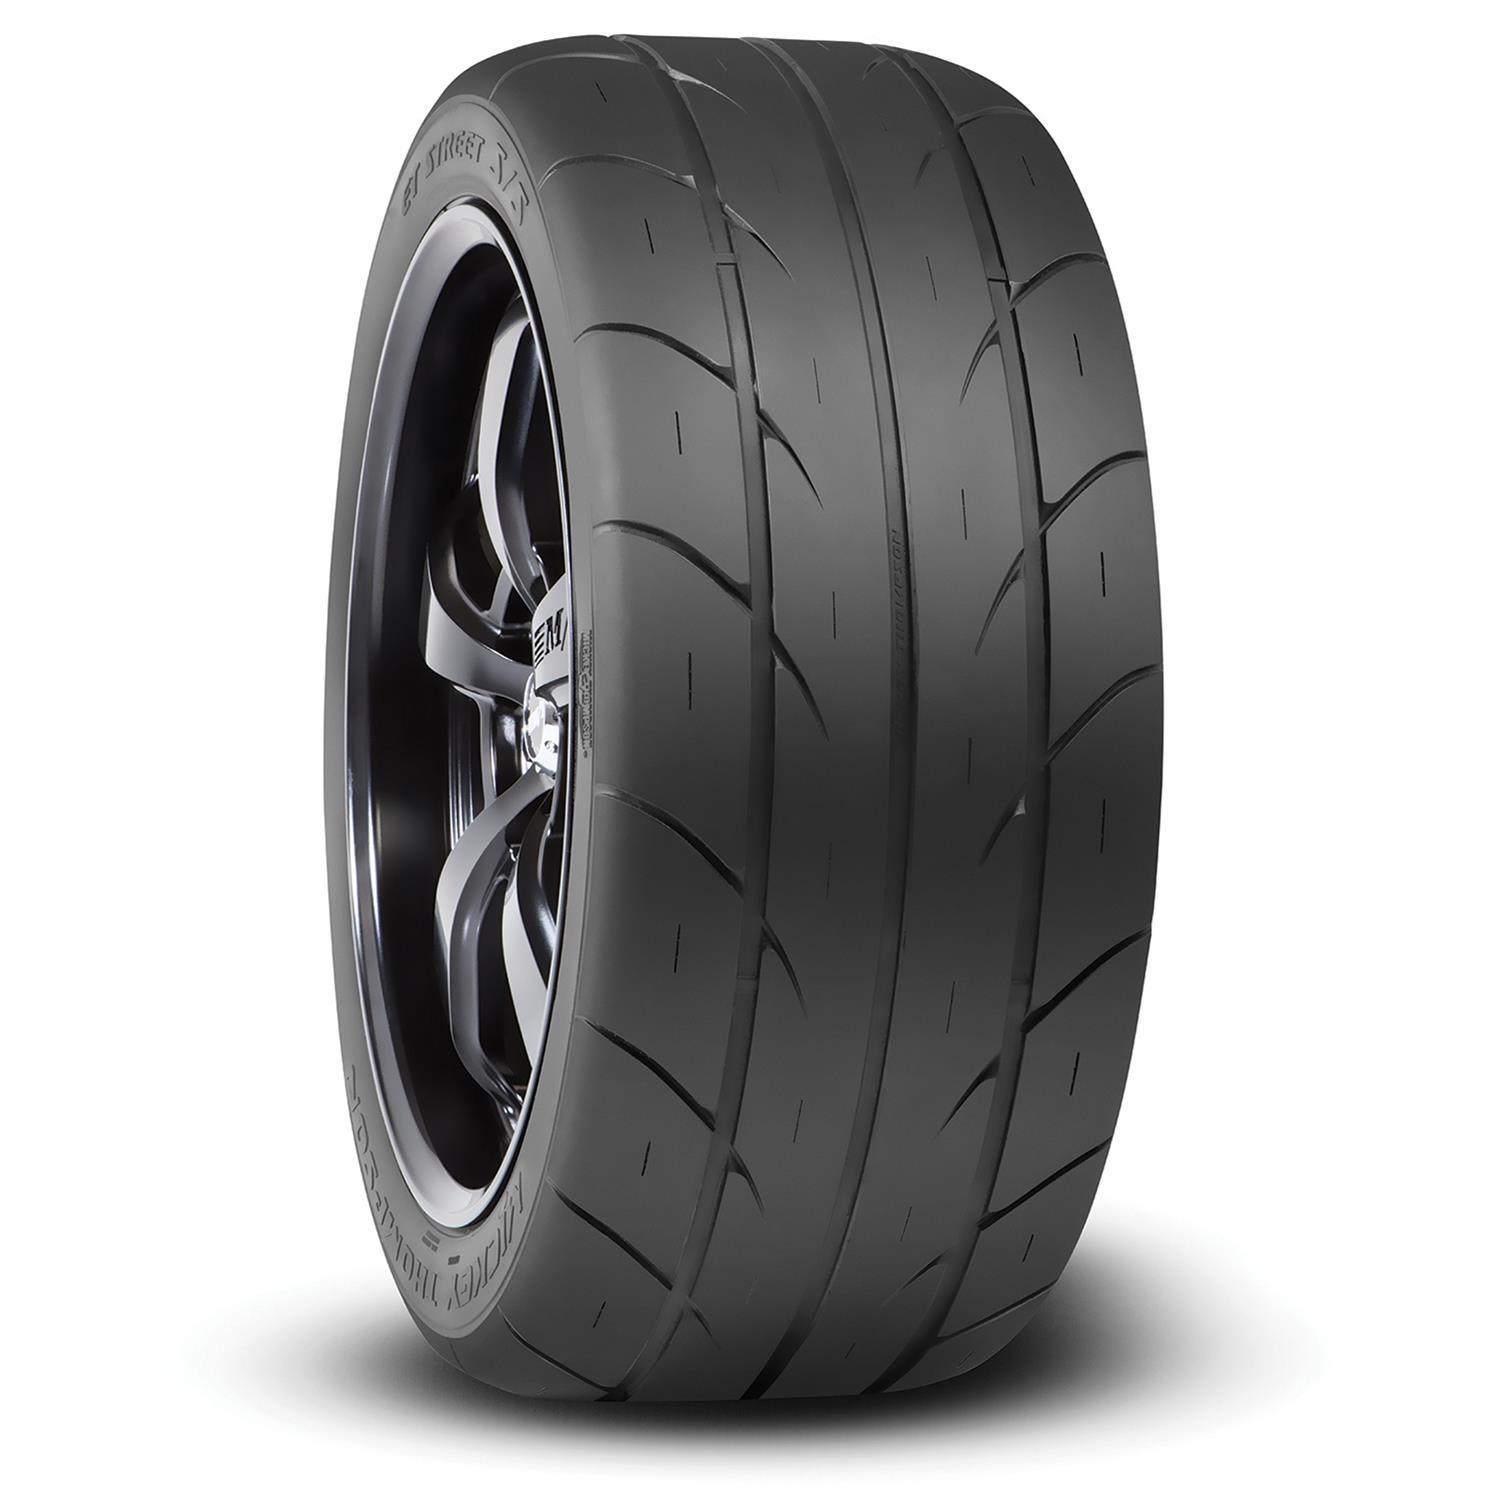 P275/50R15 ET Street S/S Tire - Burlile Performance Products